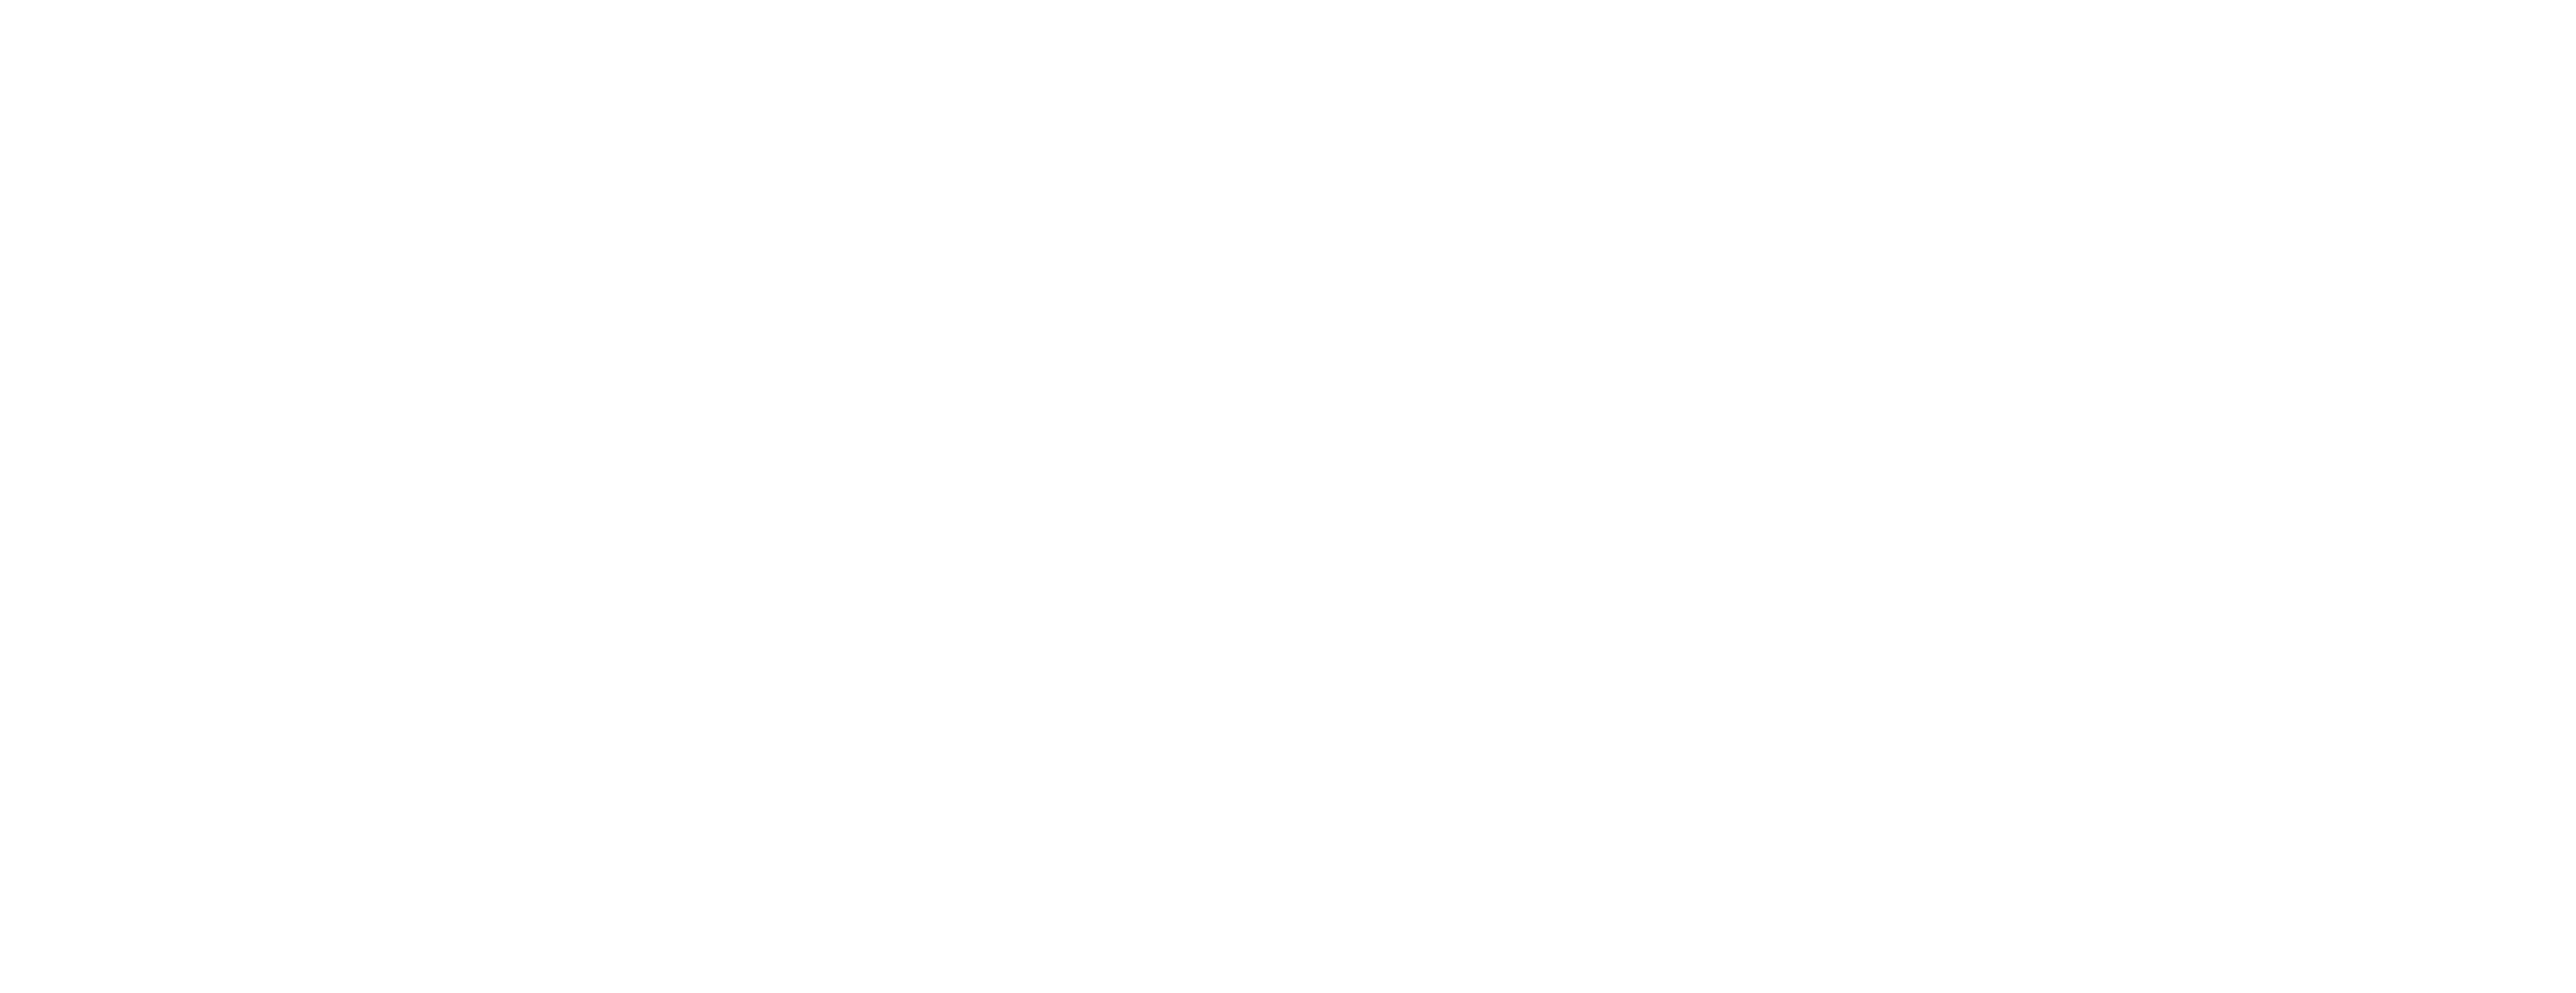 Radicali Italiani